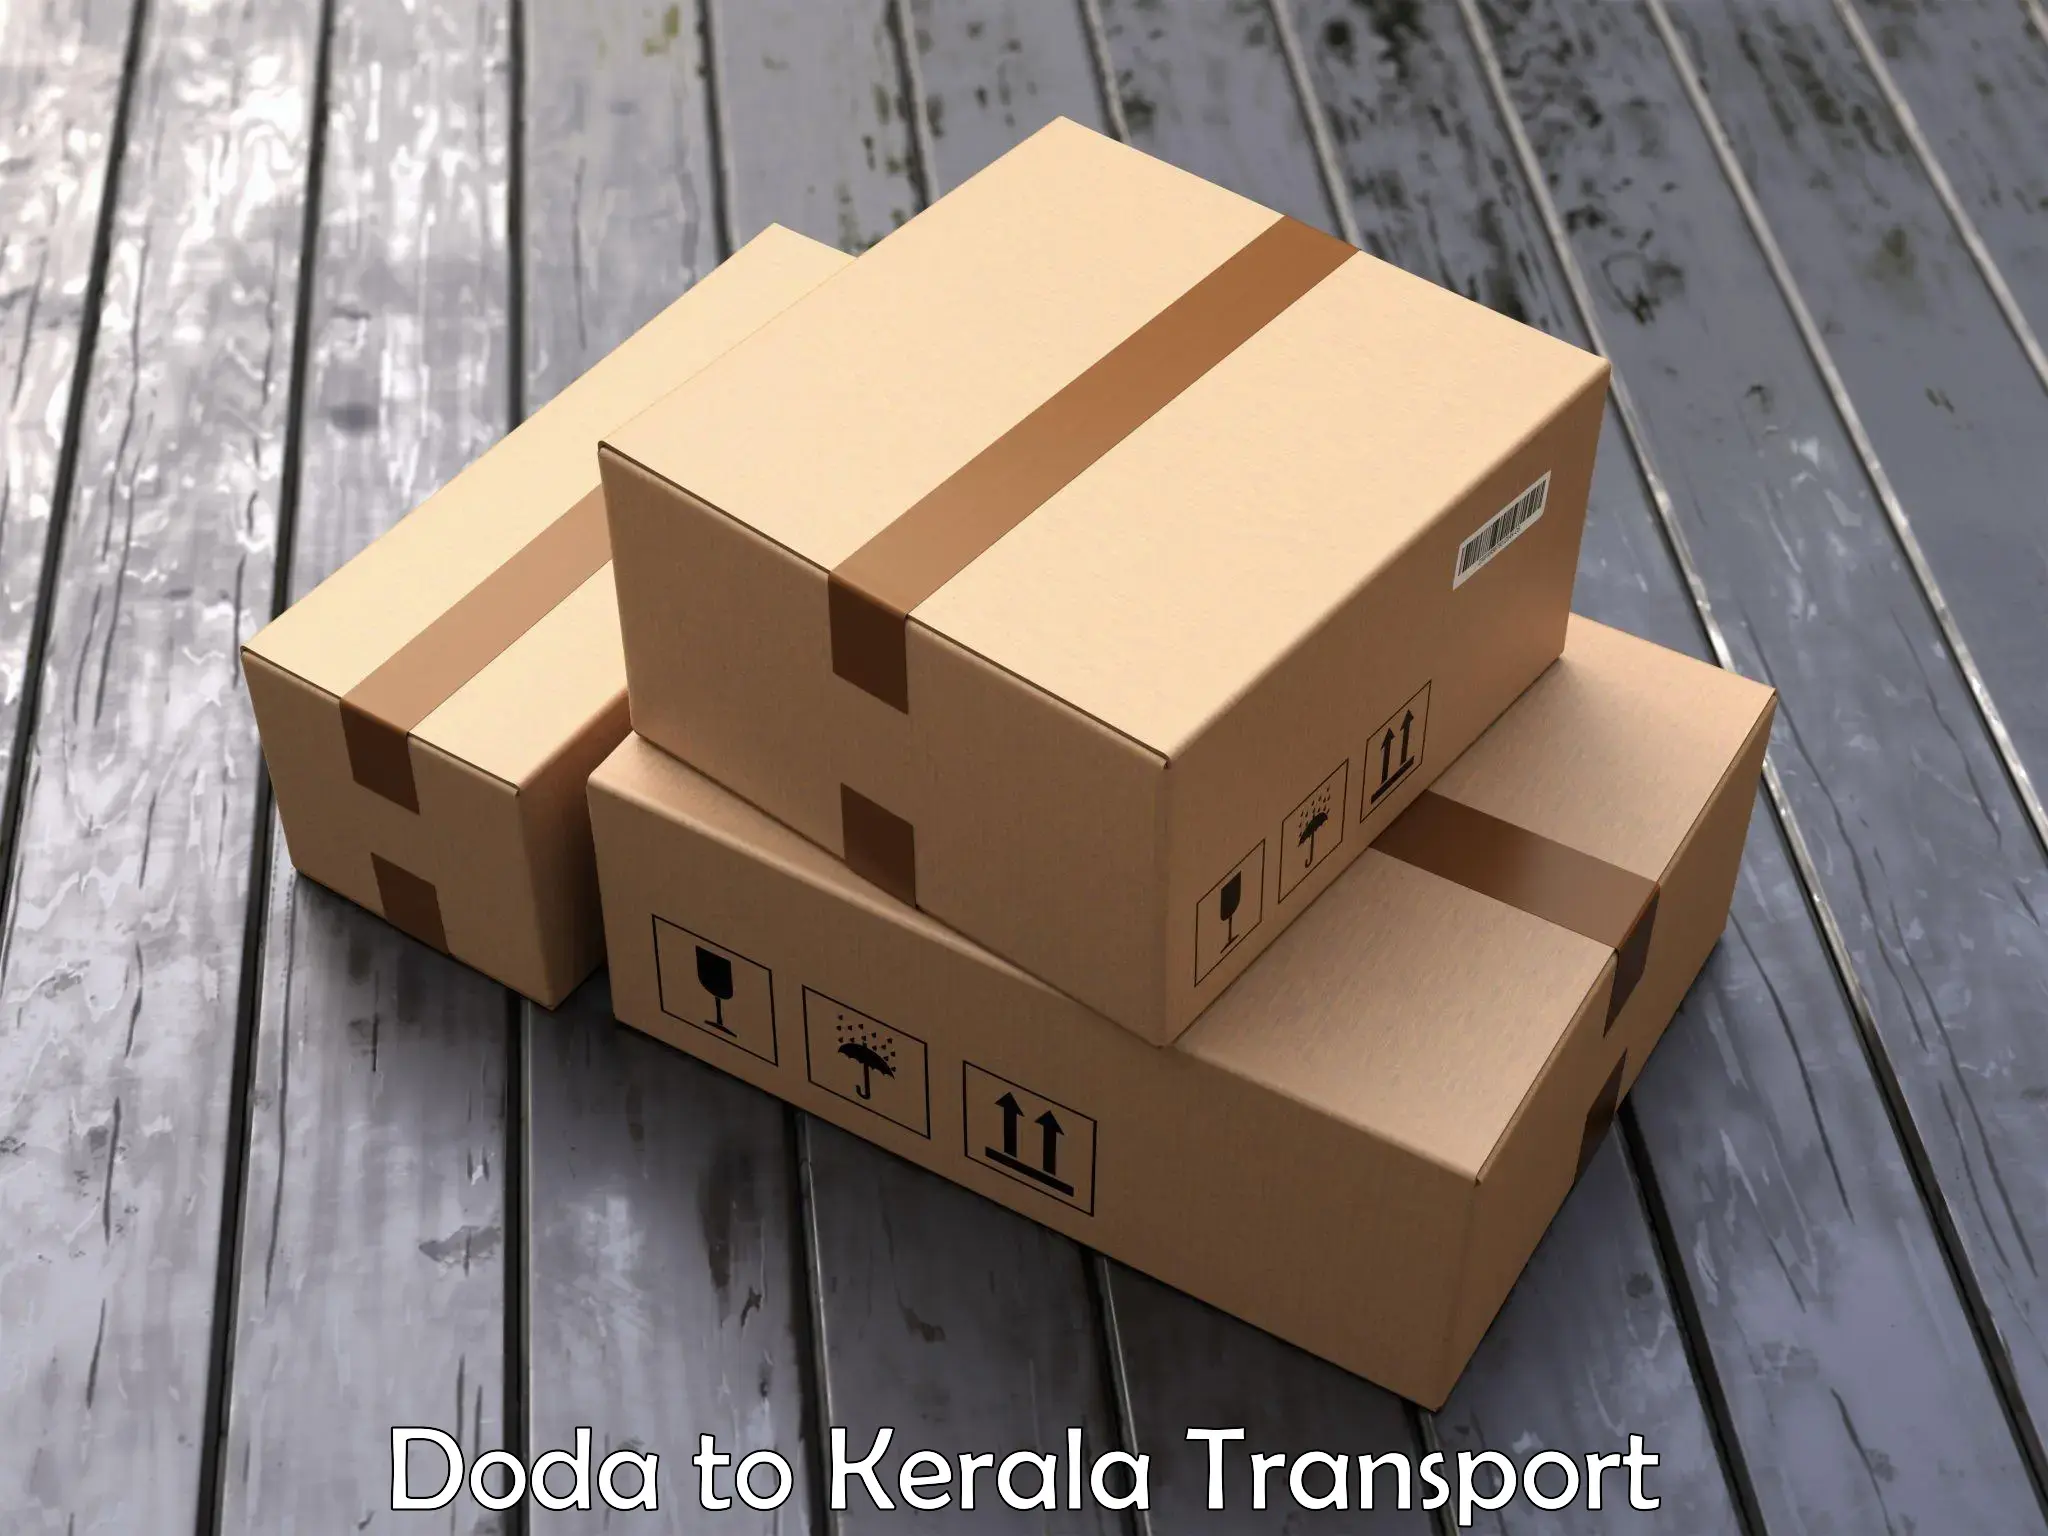 Container transport service Doda to Calicut